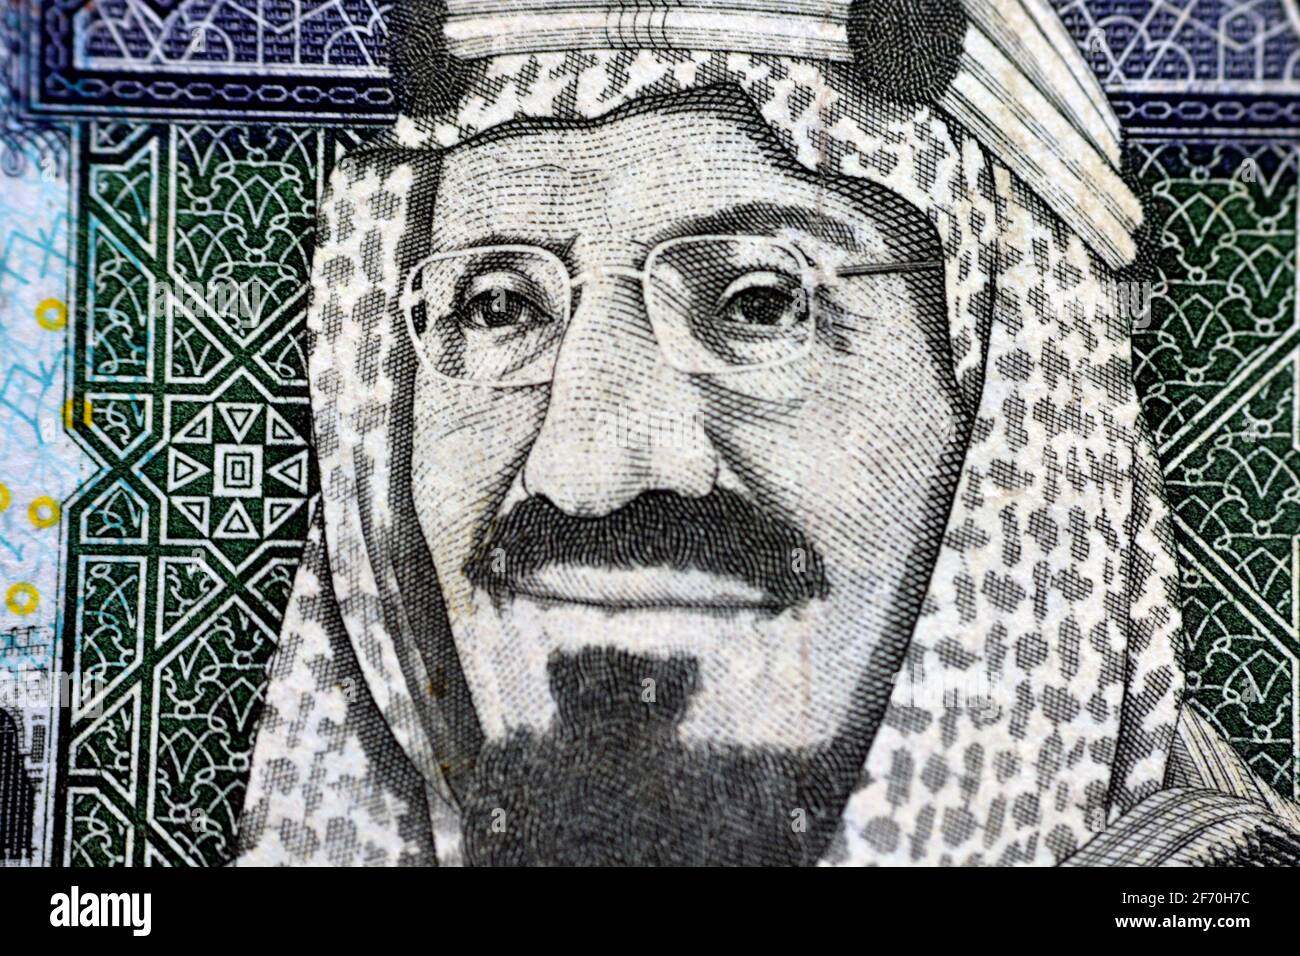 King Abdulaziz Al Saud former king of Saudi Arabia photo on the observe side of 500 Saudi riyals banknote, close-up of 500 Saudi riyals money Stock Photo